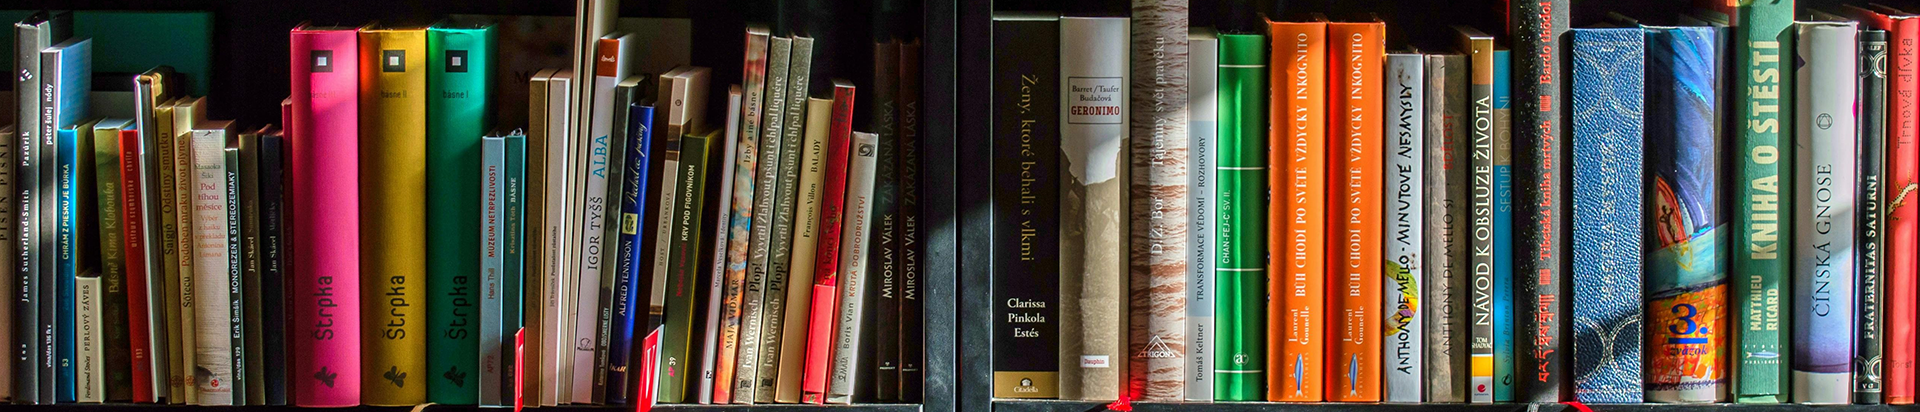 close up of books on a bookshelf